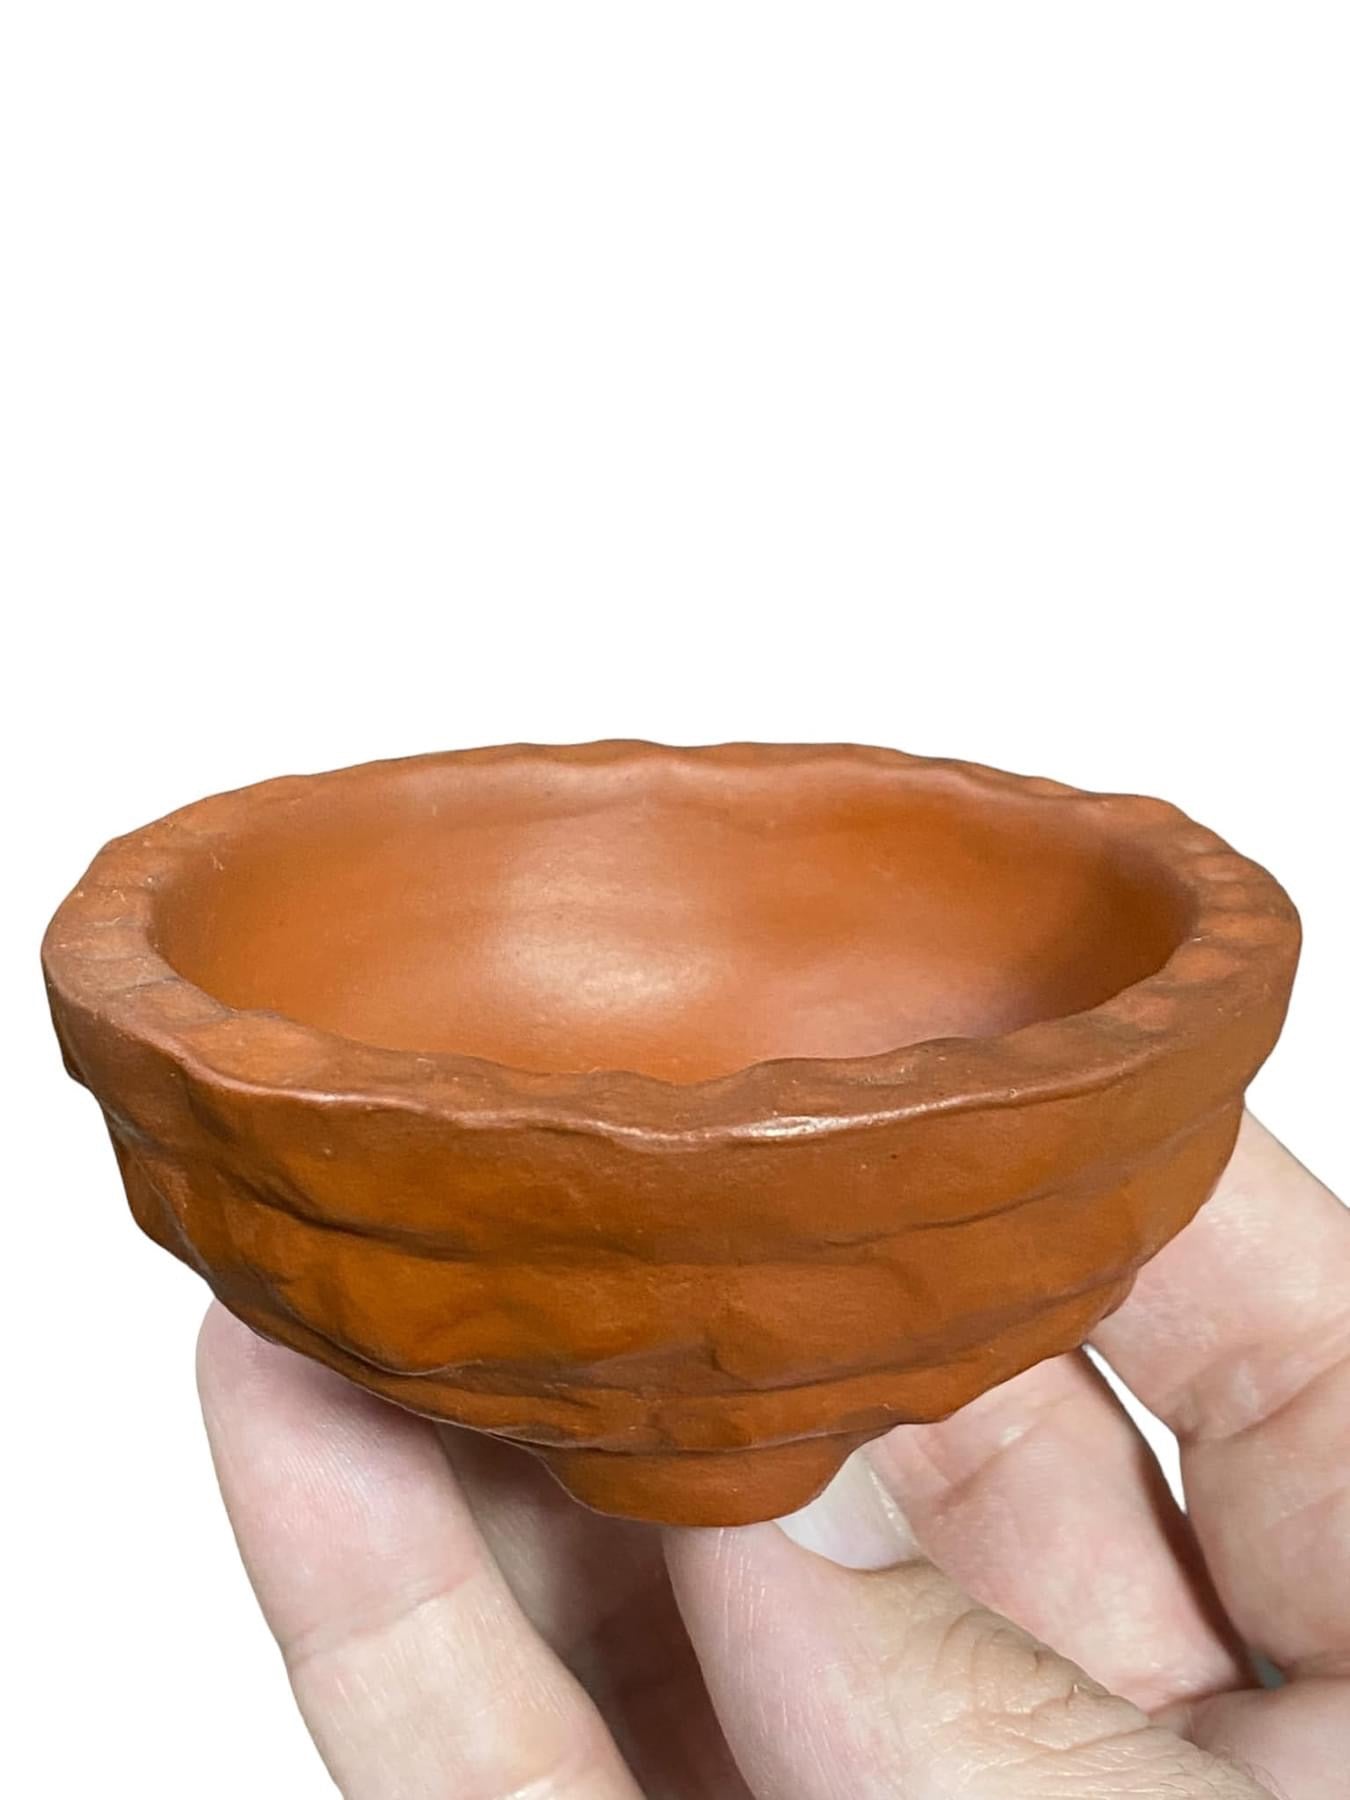 Syueto - Rare Handmade Rectangle Bonsai or Accent Pot (3-5/16" wide)